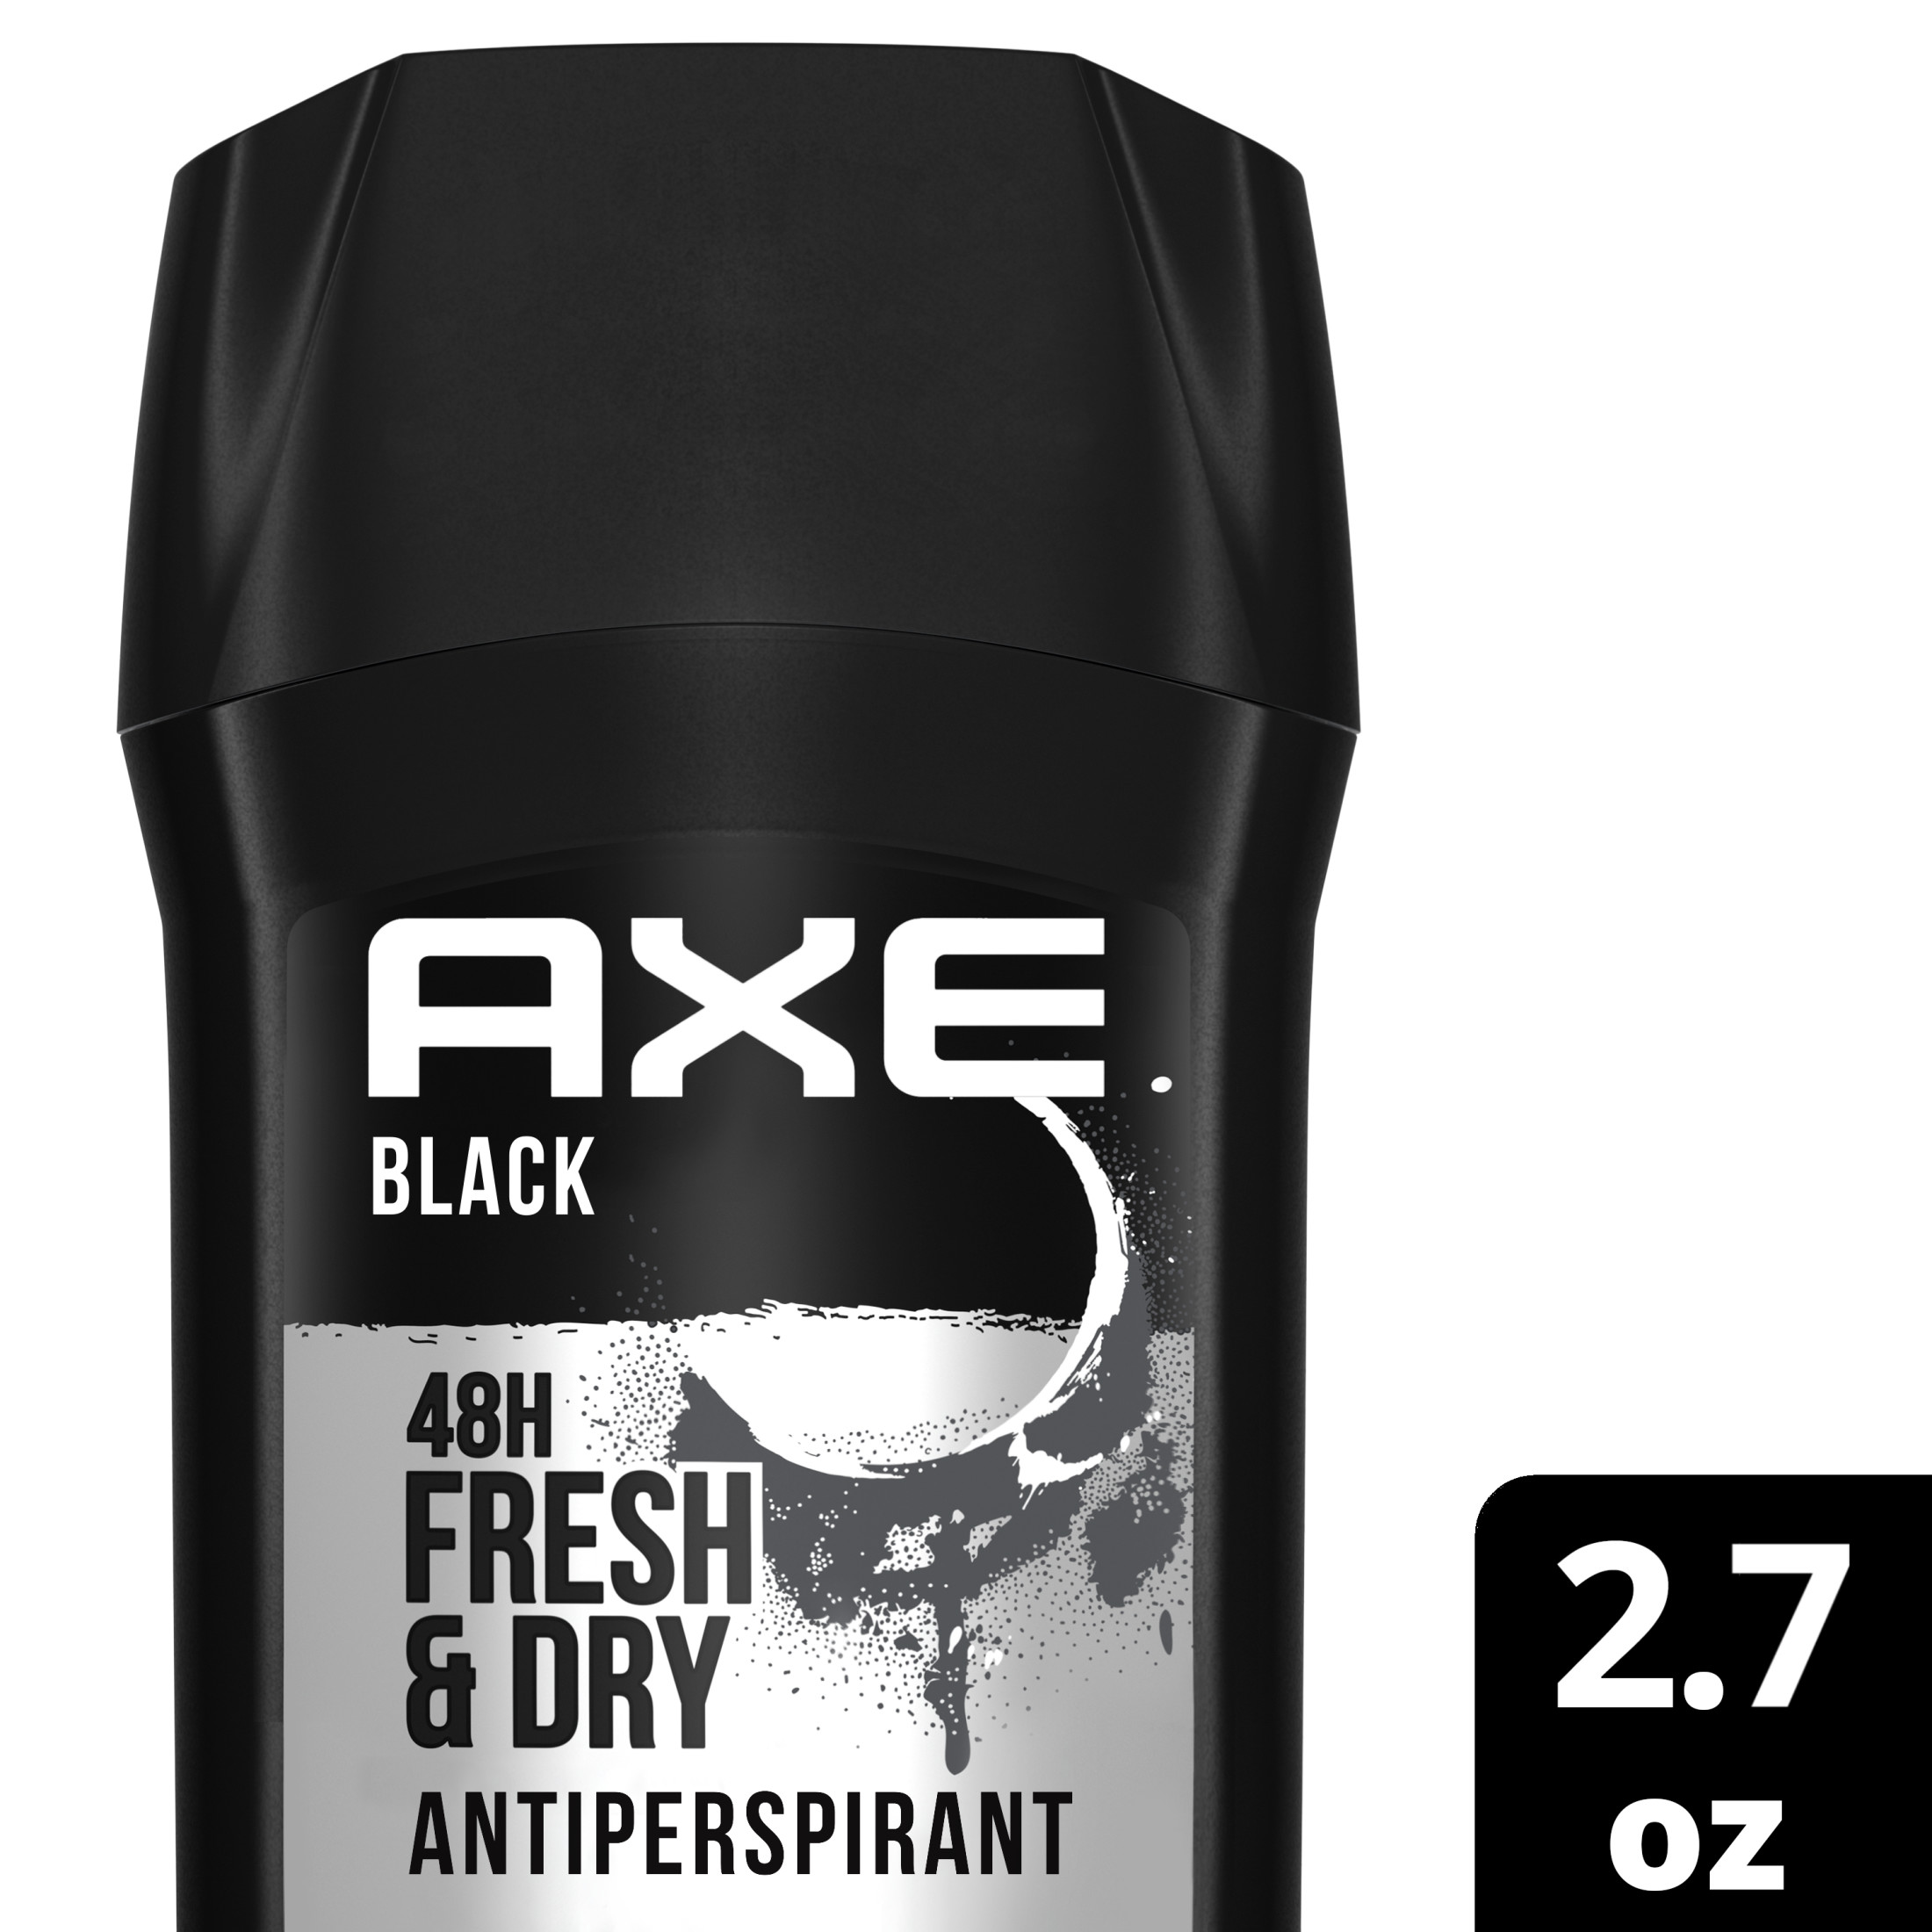 Axe Black Long Lasting Men's Antiperspirant Deodorant Stick, Frozen Pear and Cedarwood, 2.7 oz - image 2 of 8